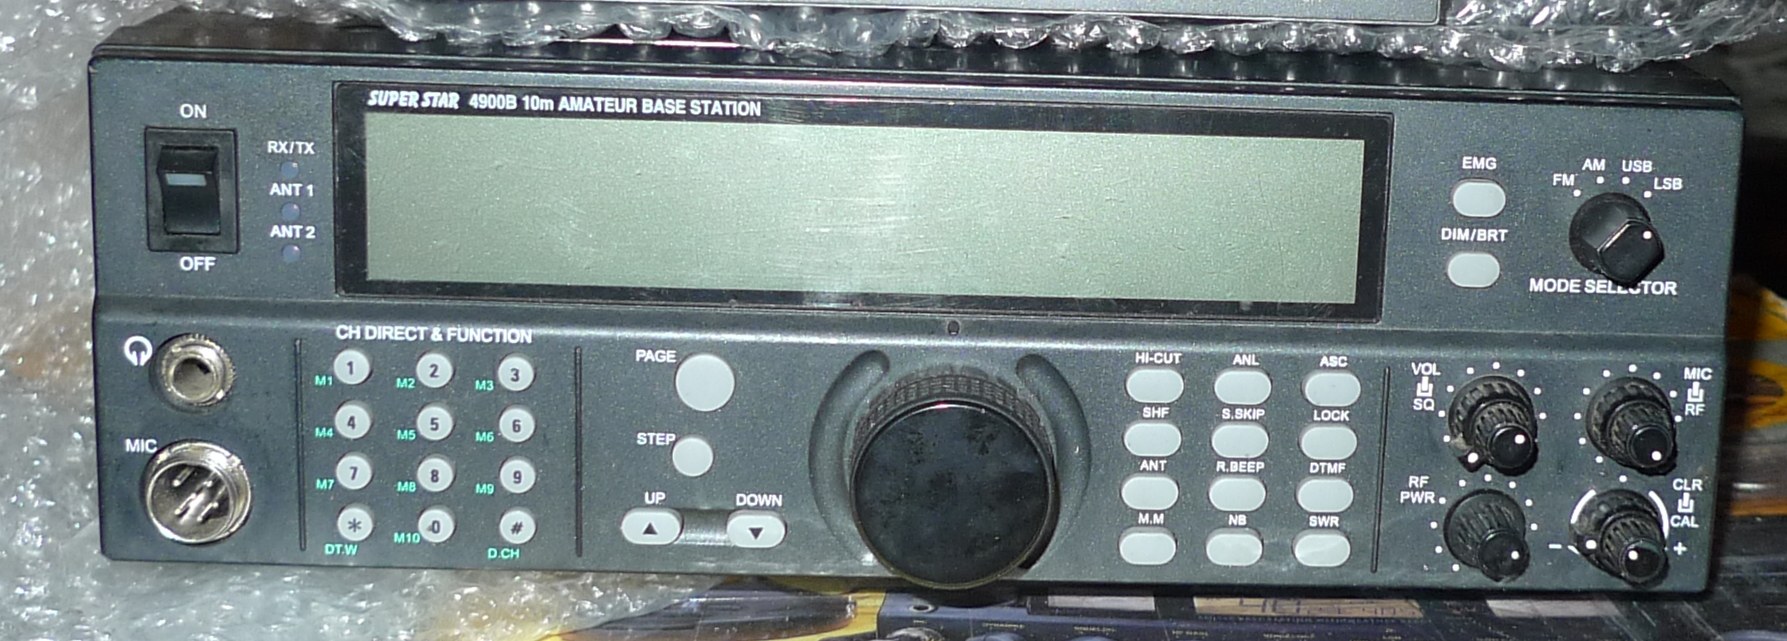 superstar 4900b base radio